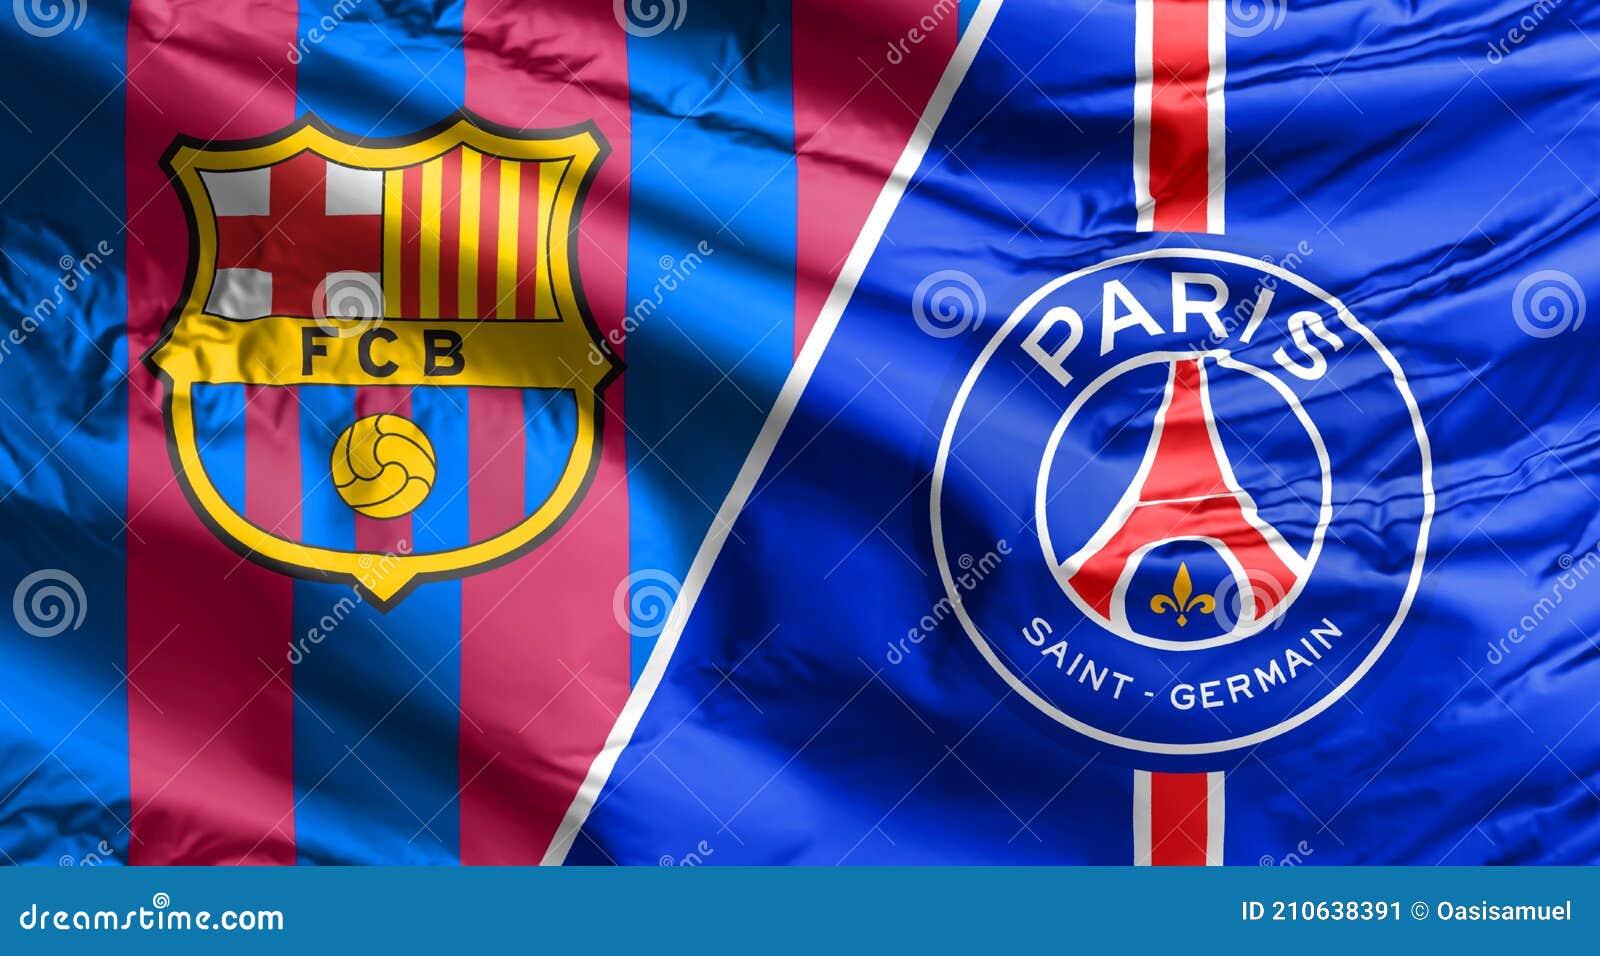 Paris saint germain fc barcelona match. Барселона Париж. Париж сен Жермен флаг. Blablabas Paris Barcelona. Барселона Париж Википедия.